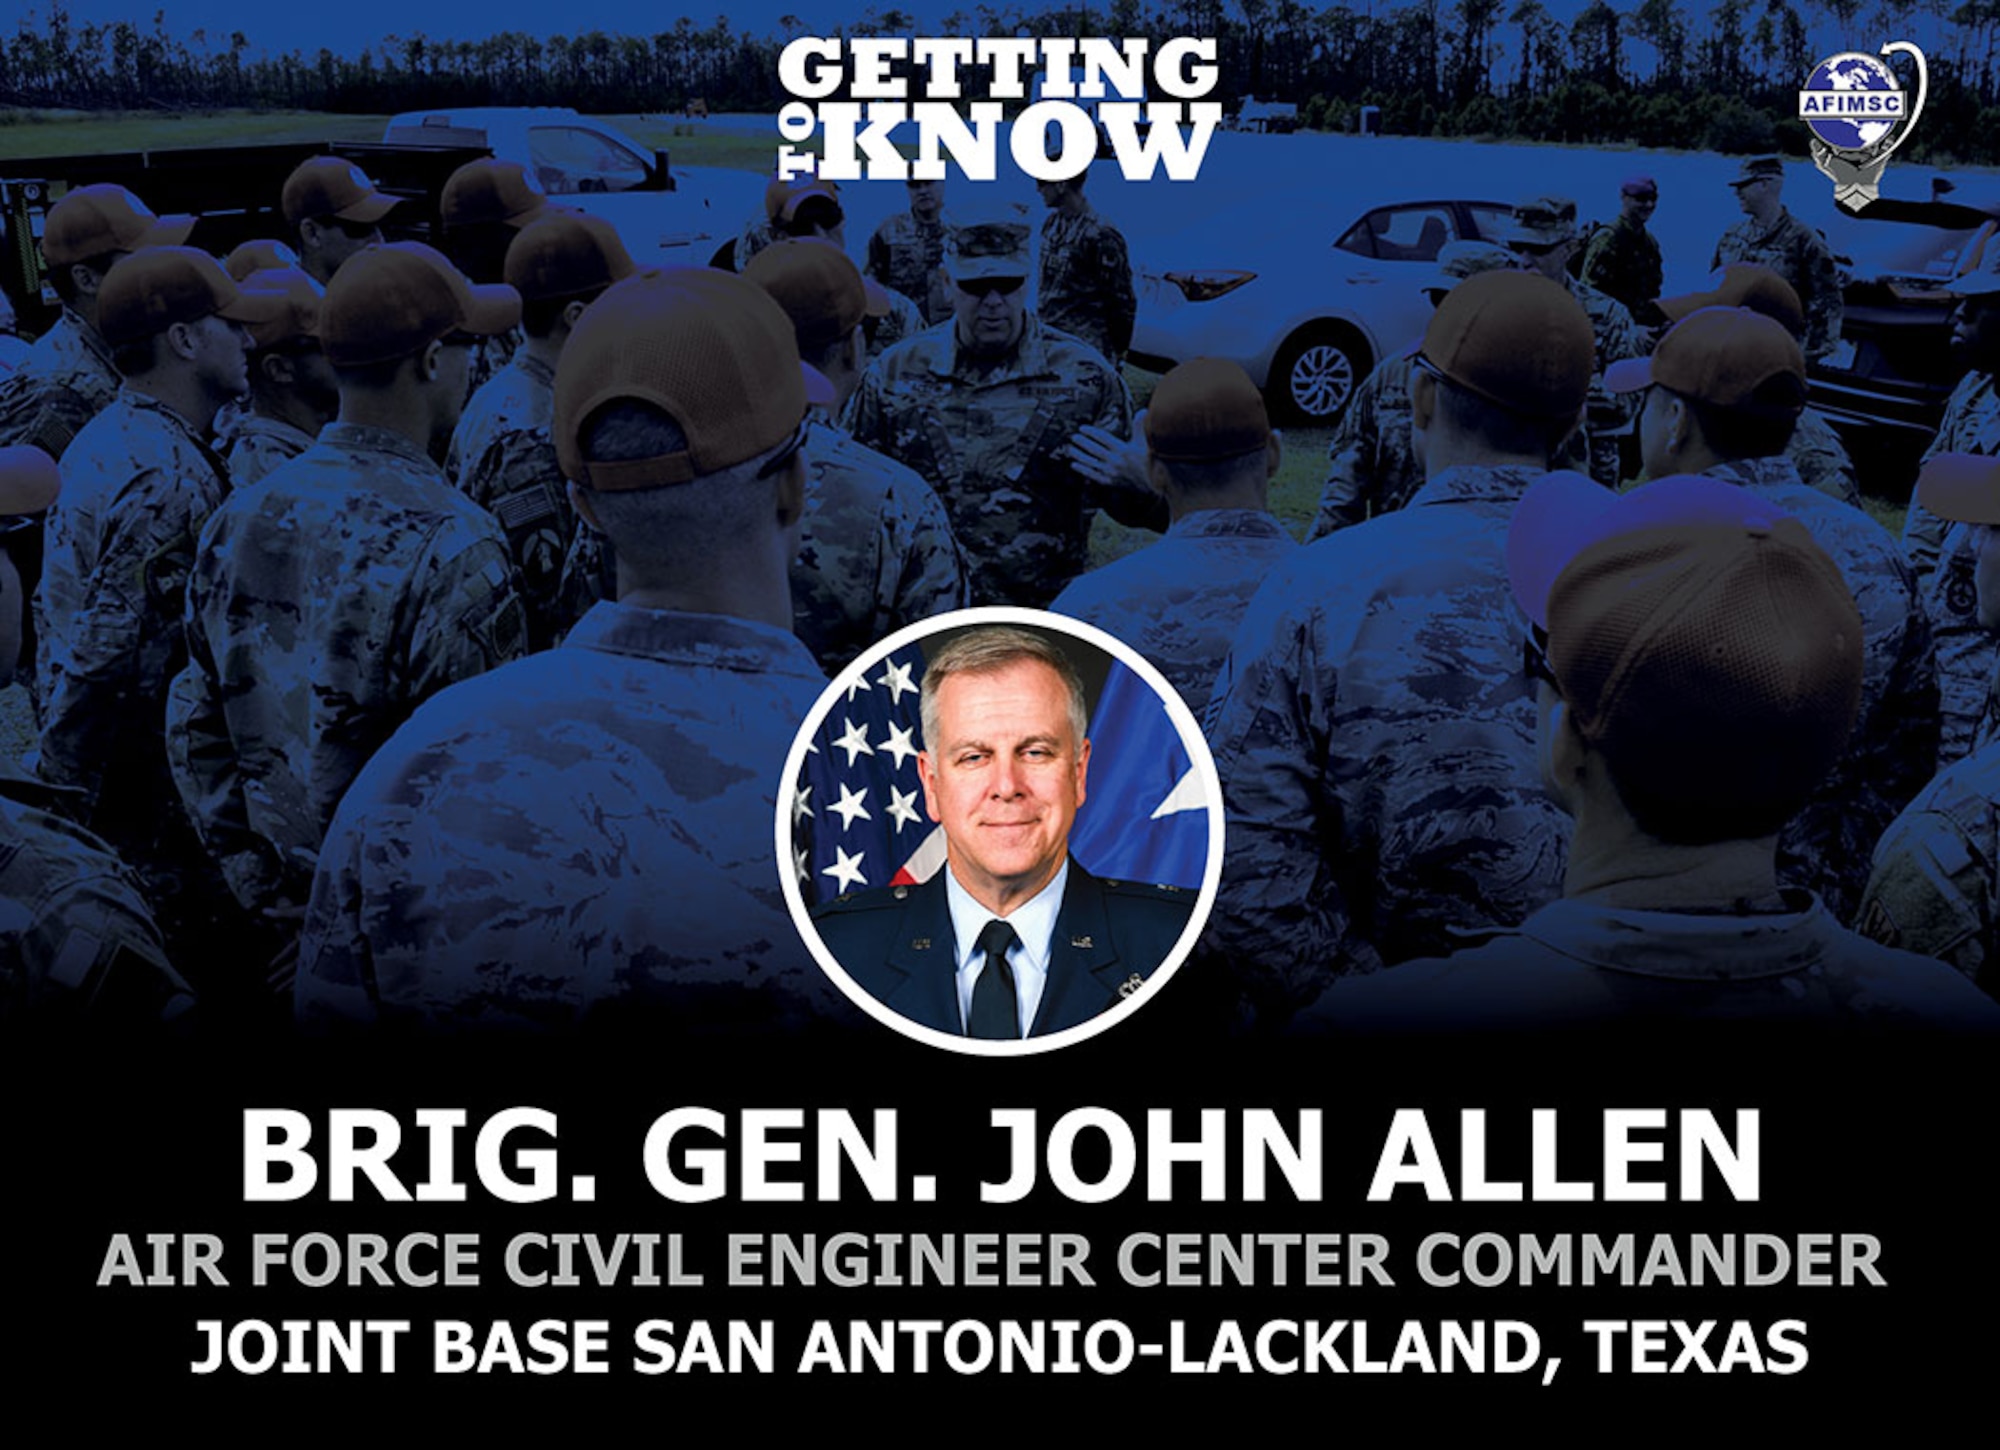 Brig. Gen. John Allen is the new Air Force Civil Engineer Center Commander